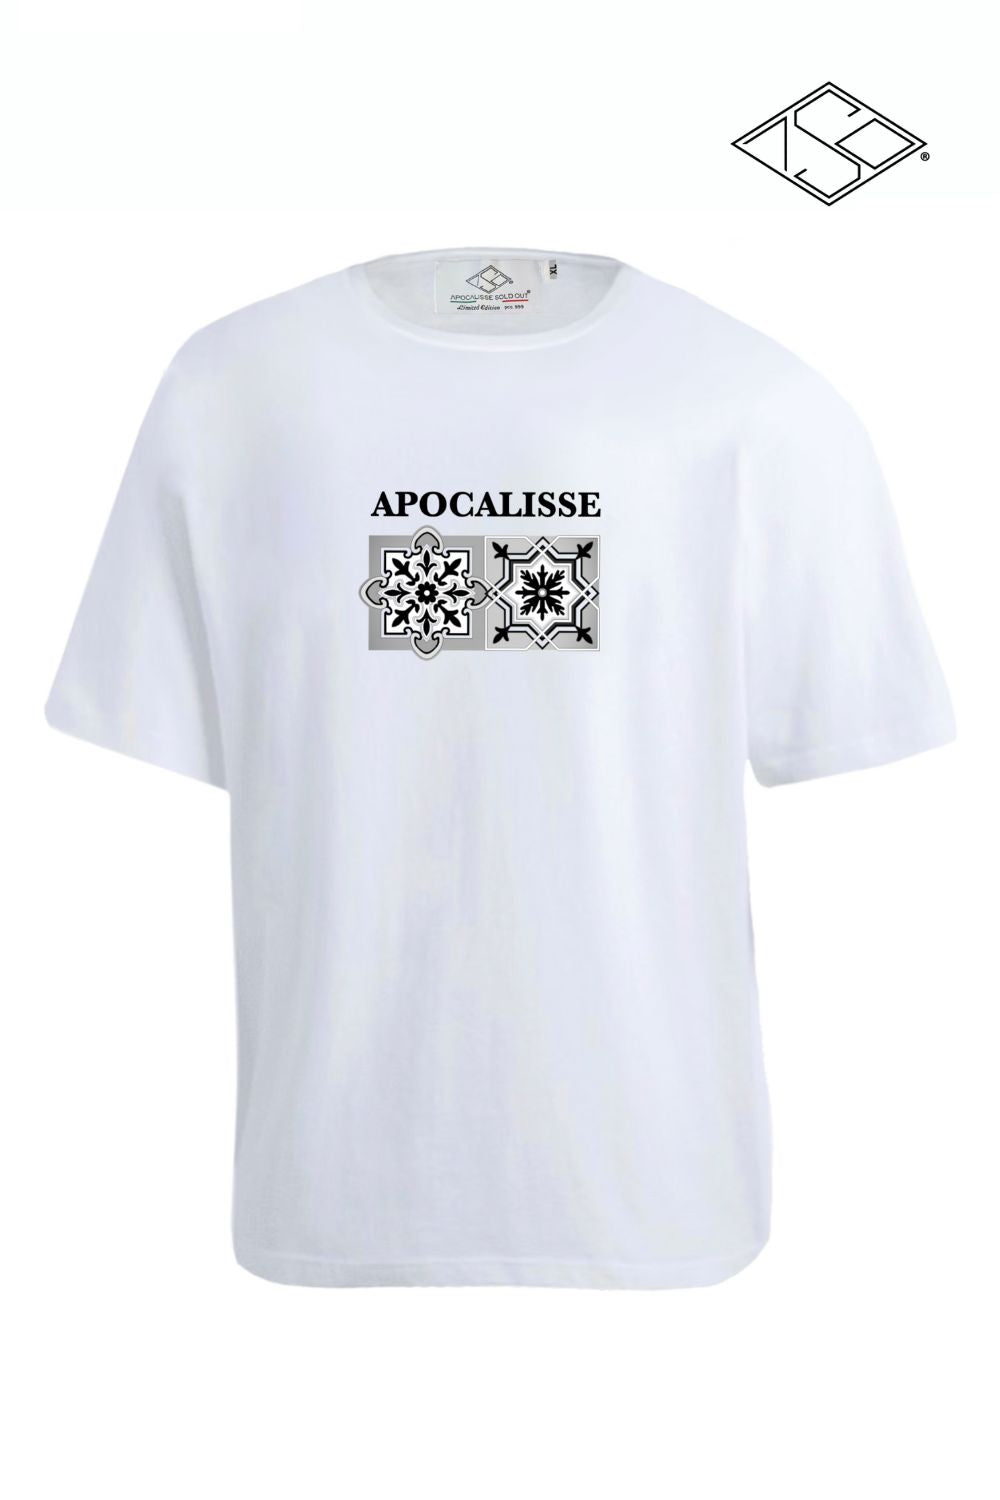 tshirt bianca marca Apocalisse modello MATTONELLA maiolicaby ApocalisseSoldOut® Fashion Brand